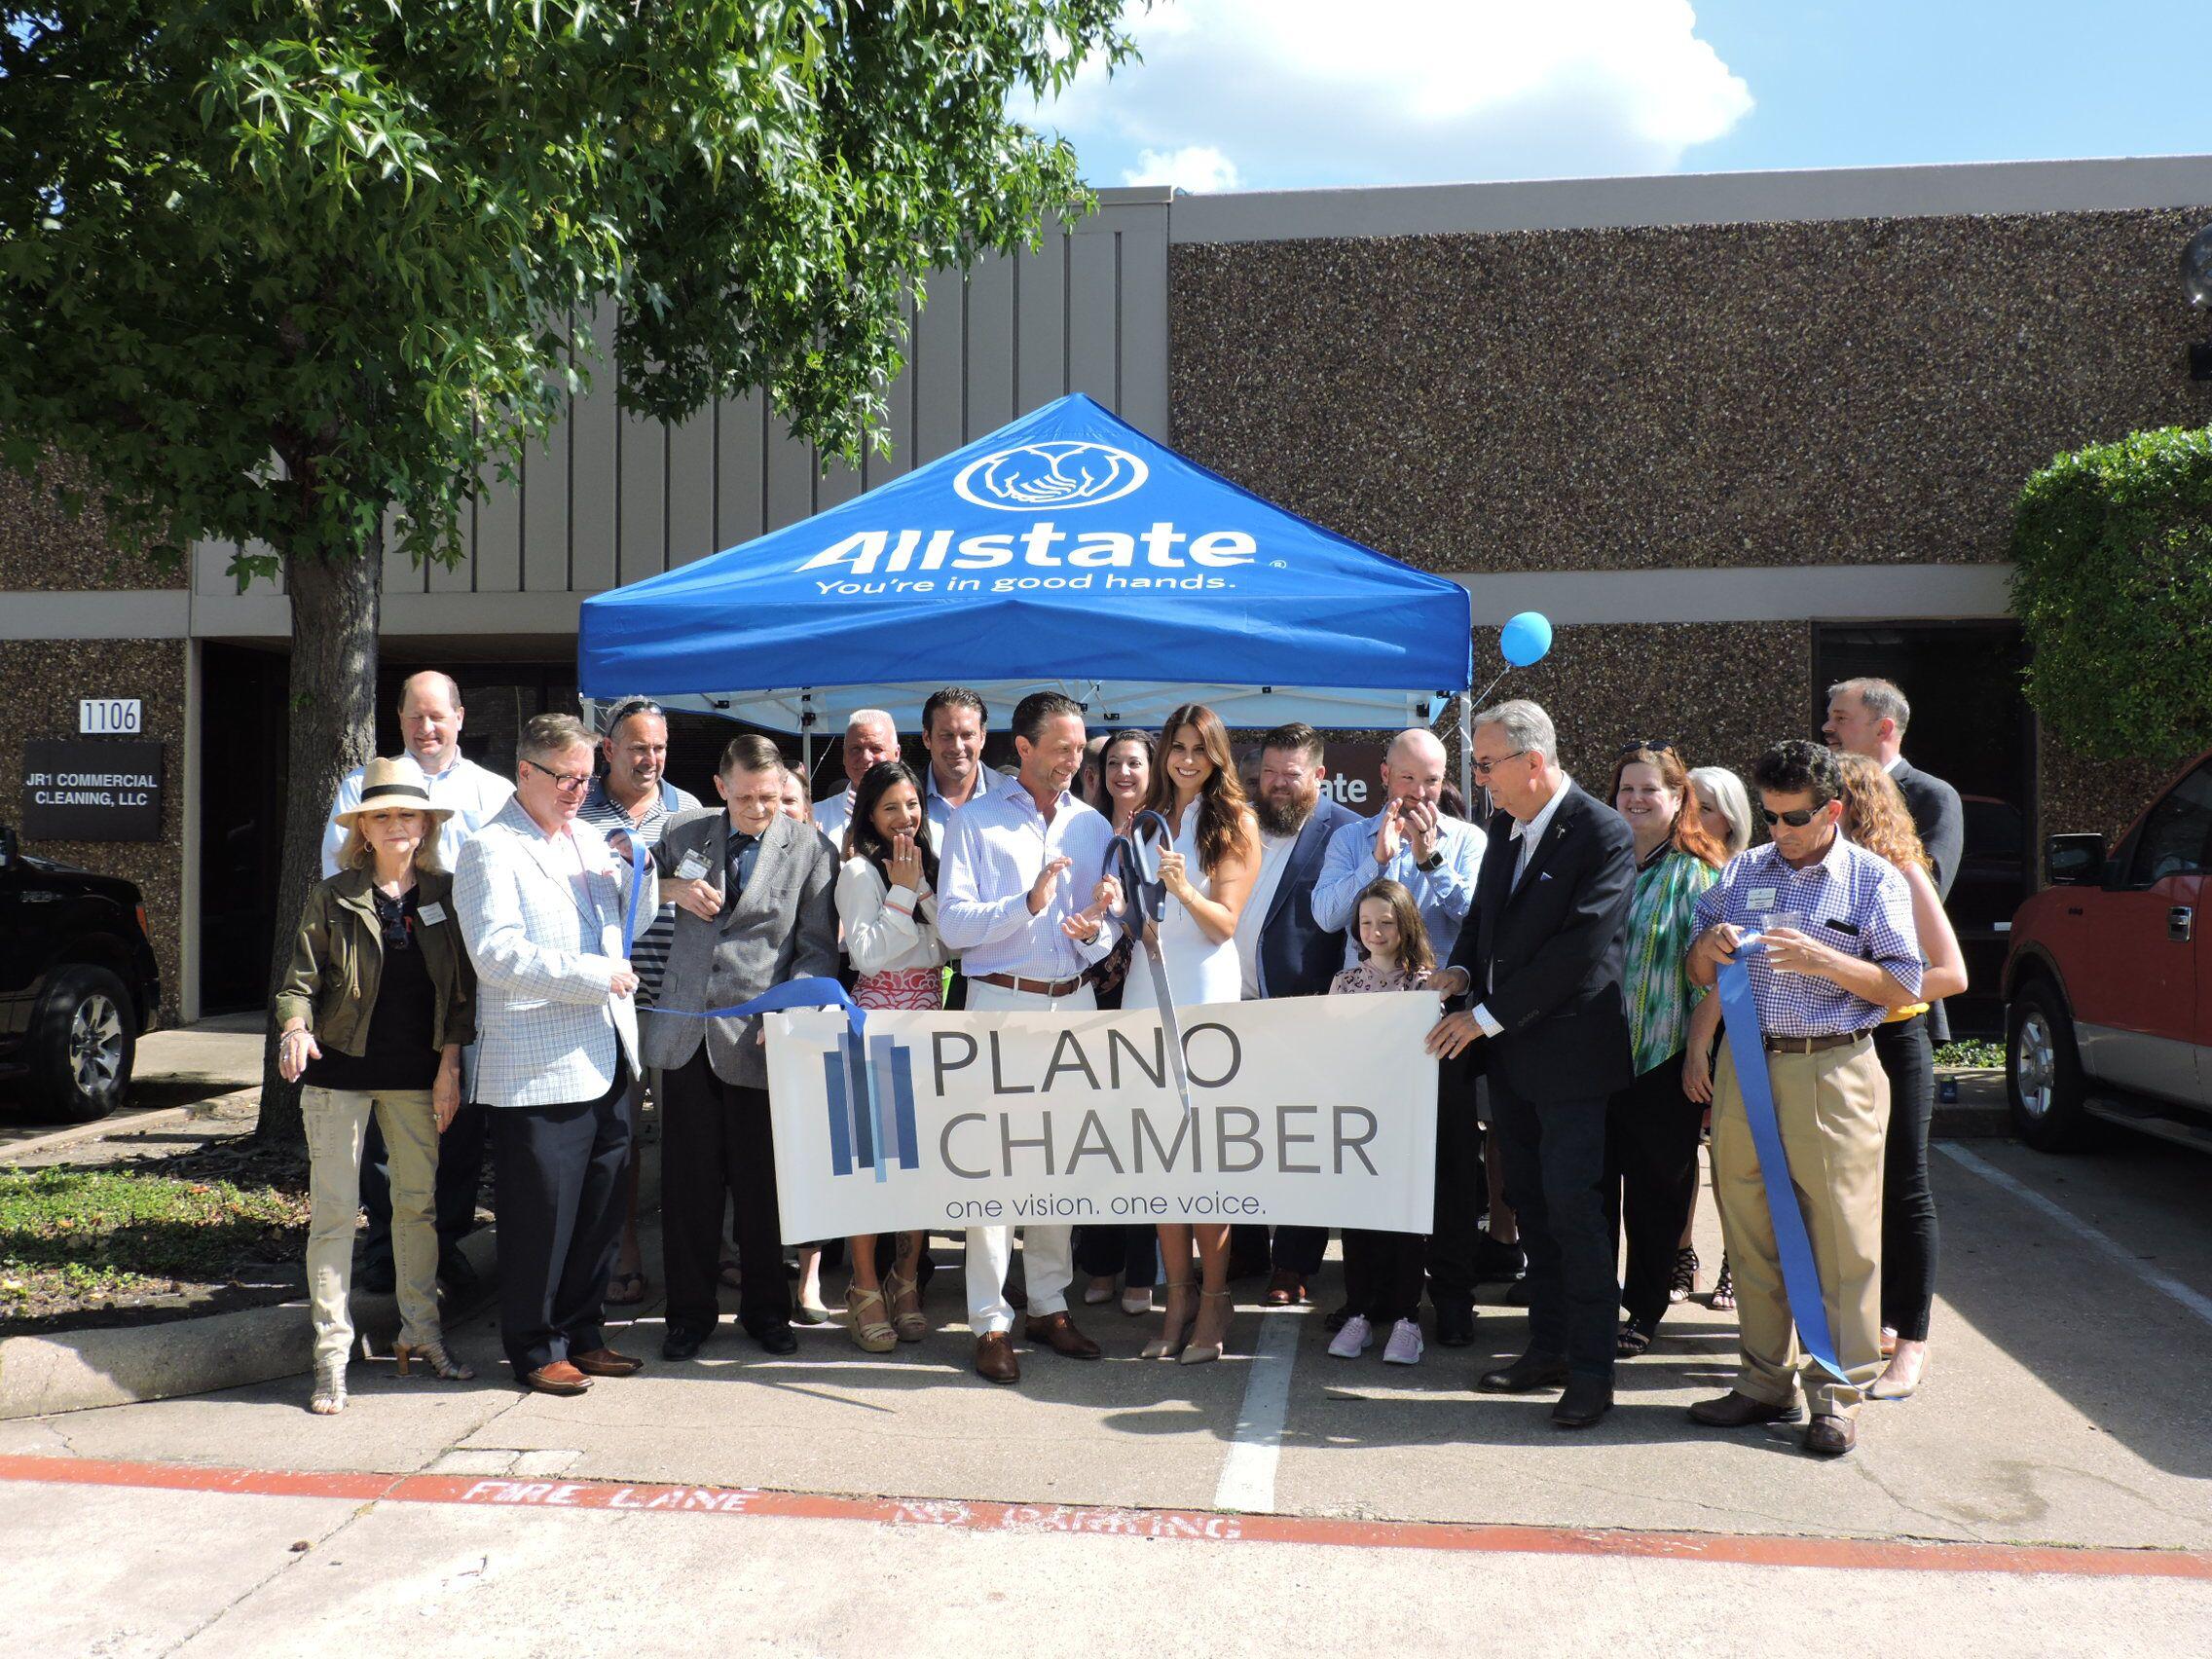 Plano Premier Insurance Agency: Allstate Insurance Photo